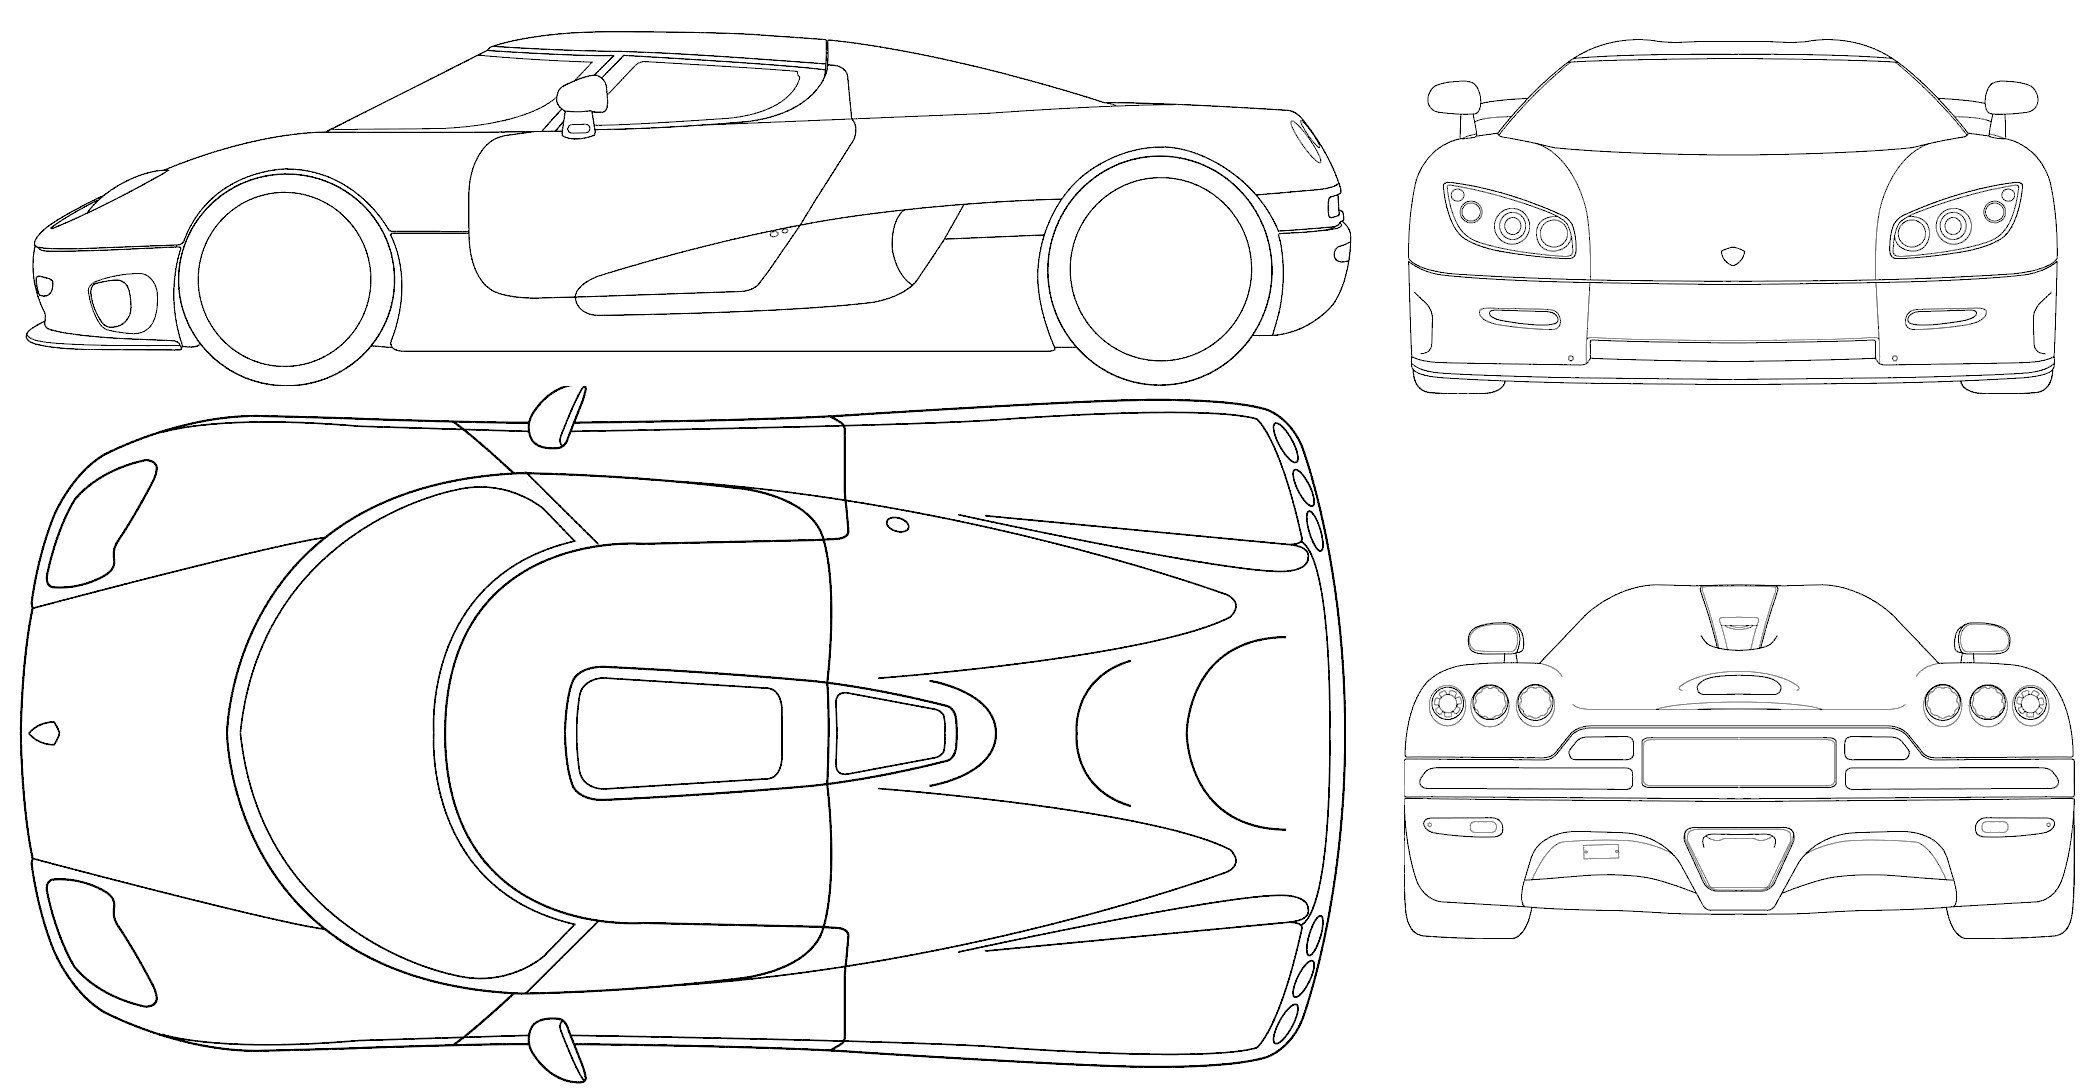 Koenigsegg CCR Blueprints Vector Drawing Koenigsegg blueprints ccr
drawing sketch coupe 2006 scheme